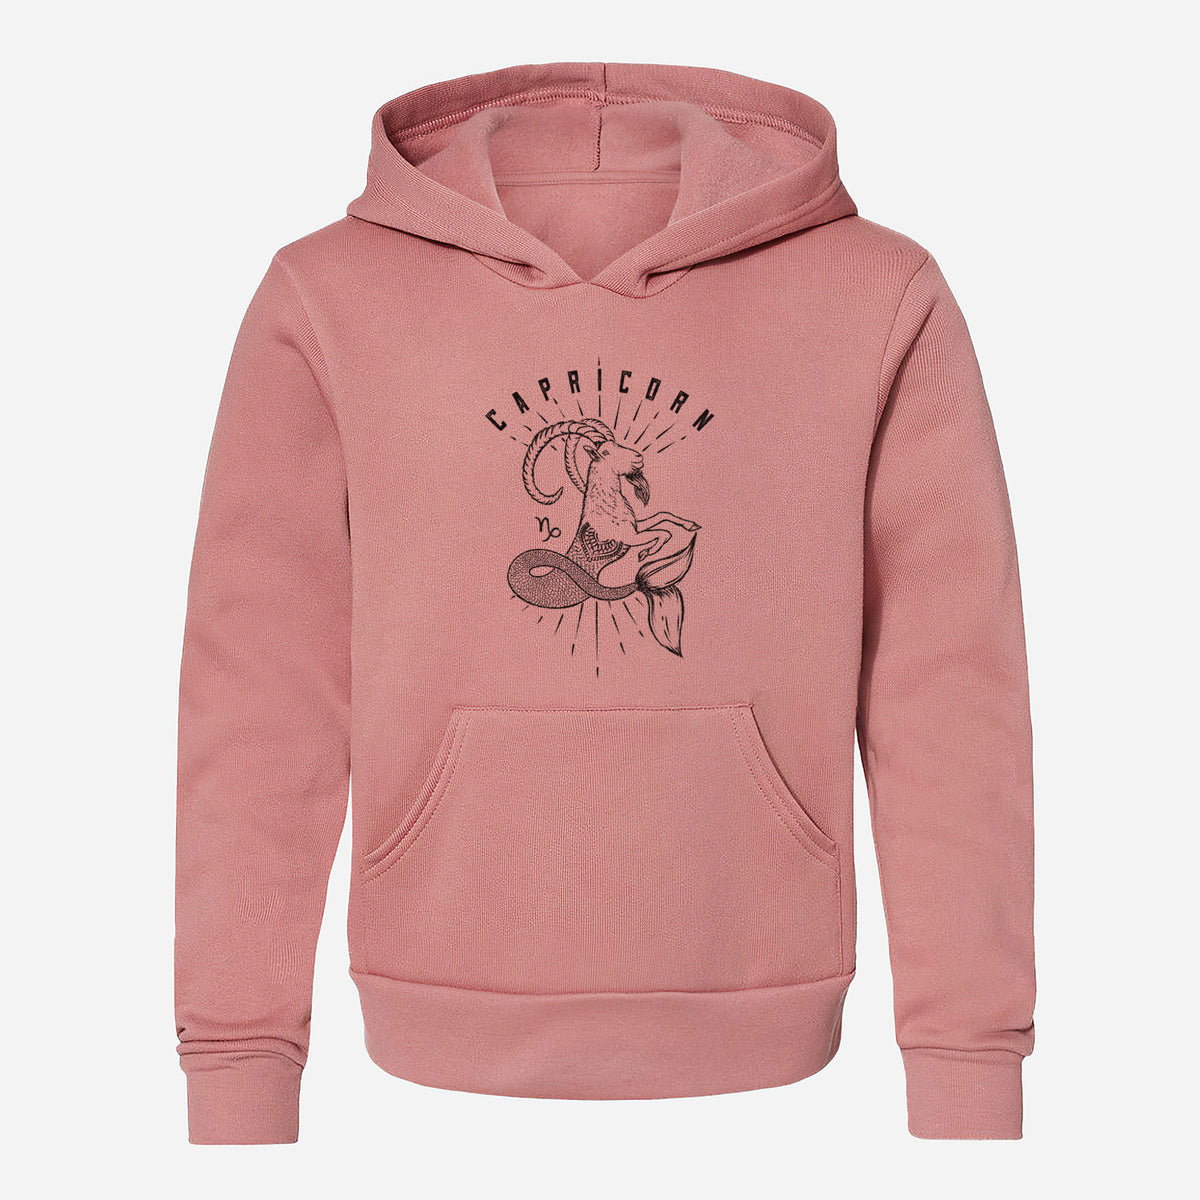 Capricorn - Sea Goat - Youth Hoodie Sweatshirt